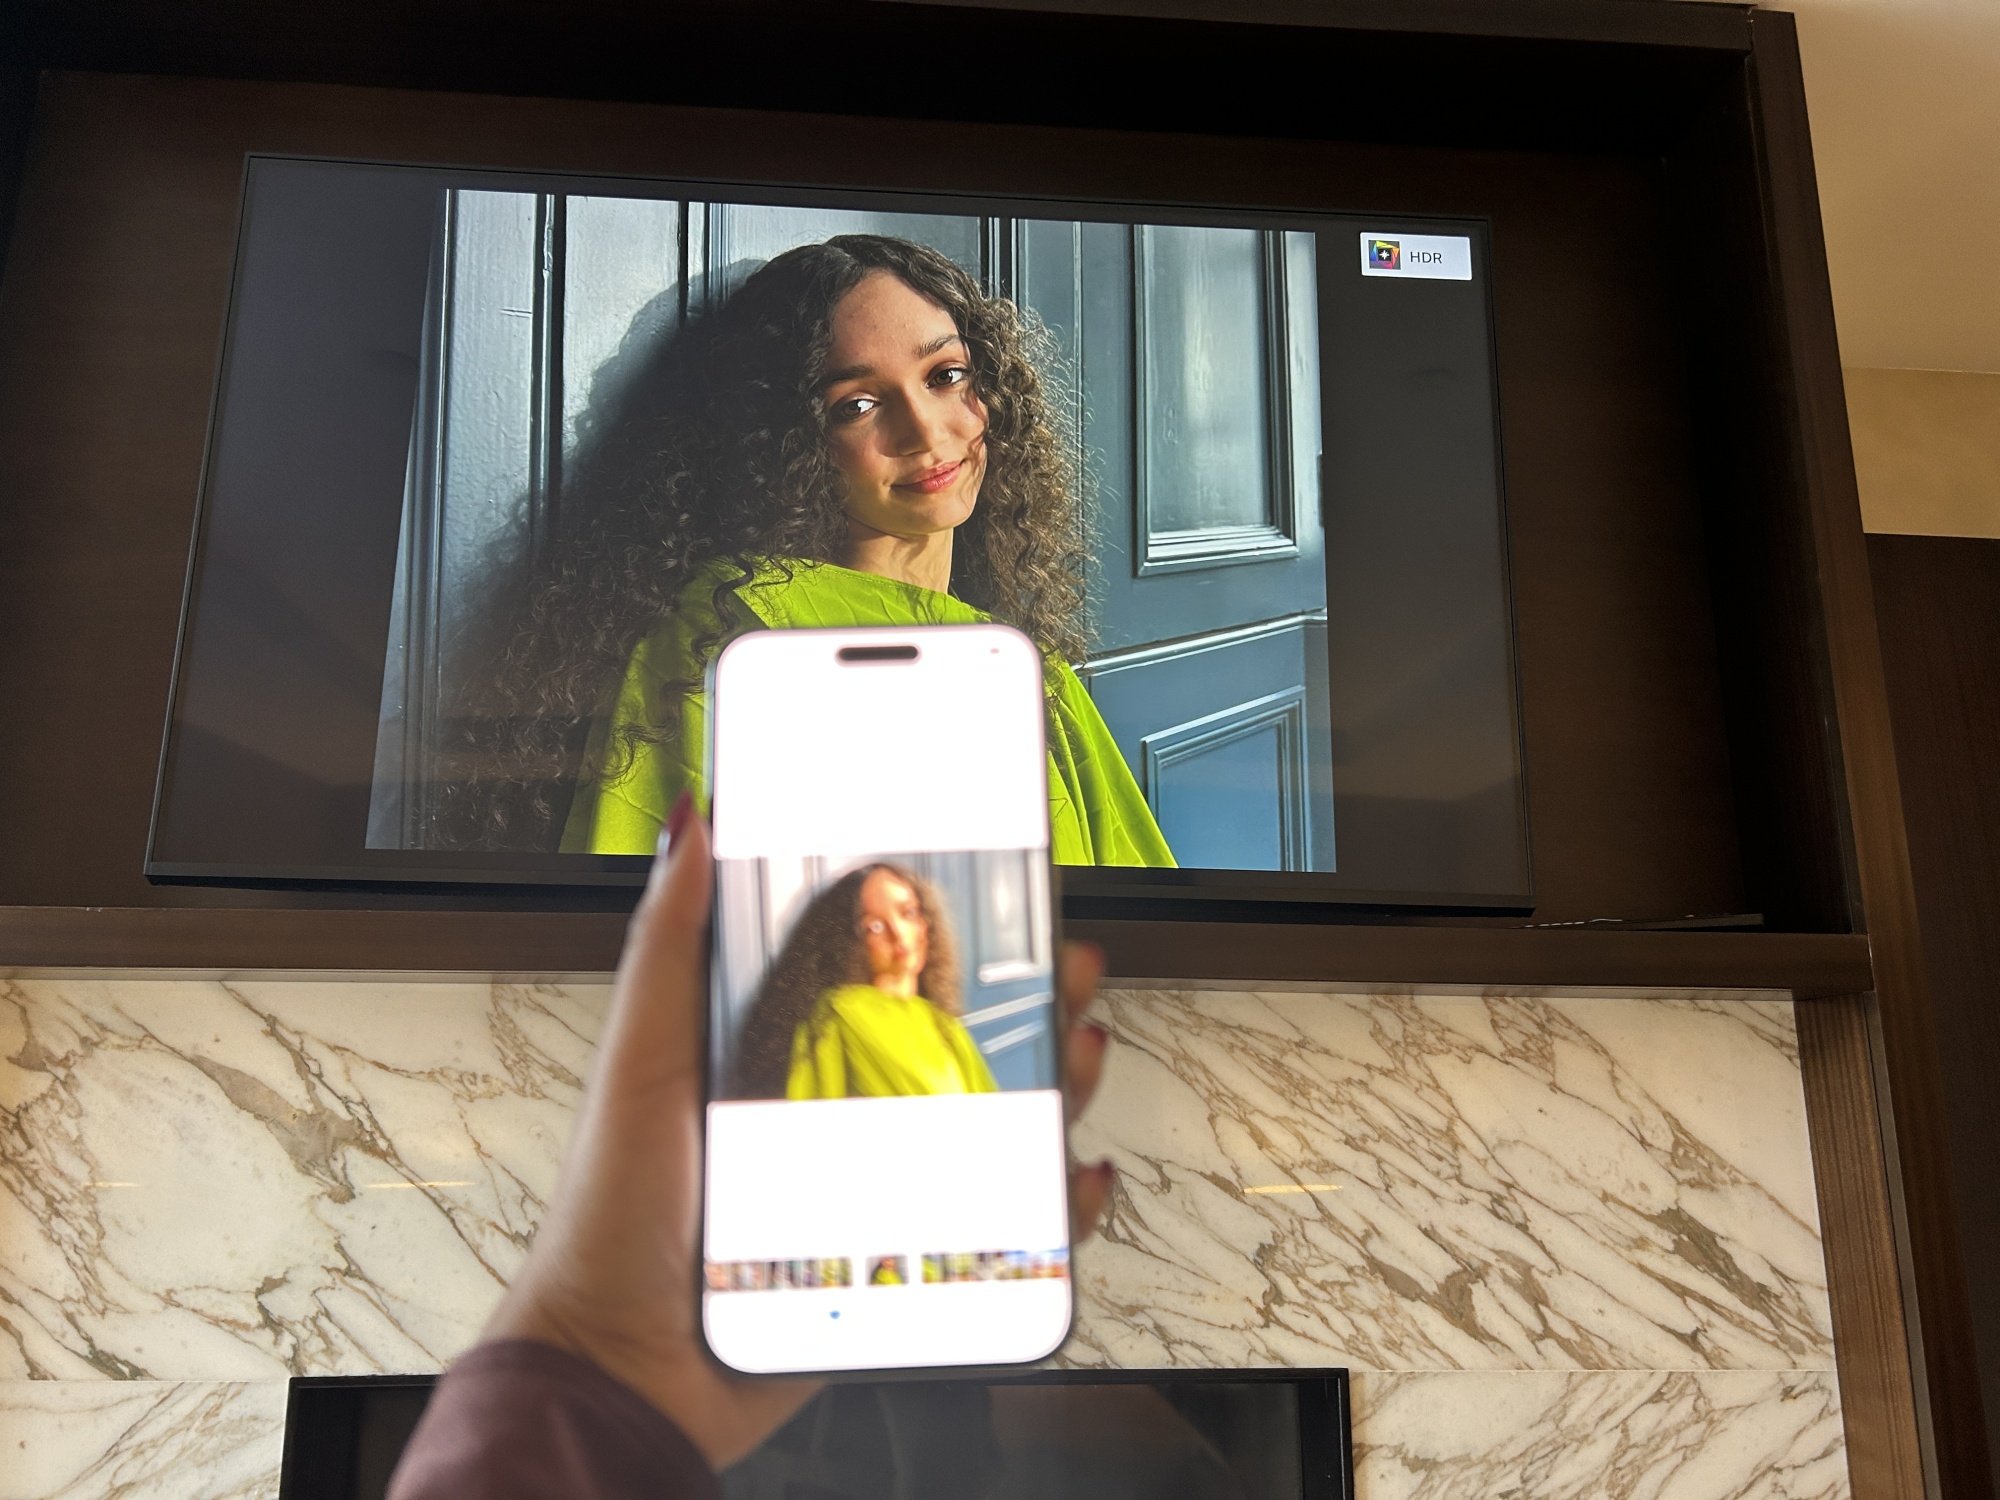 Photos app via screen mirroring on iPhone